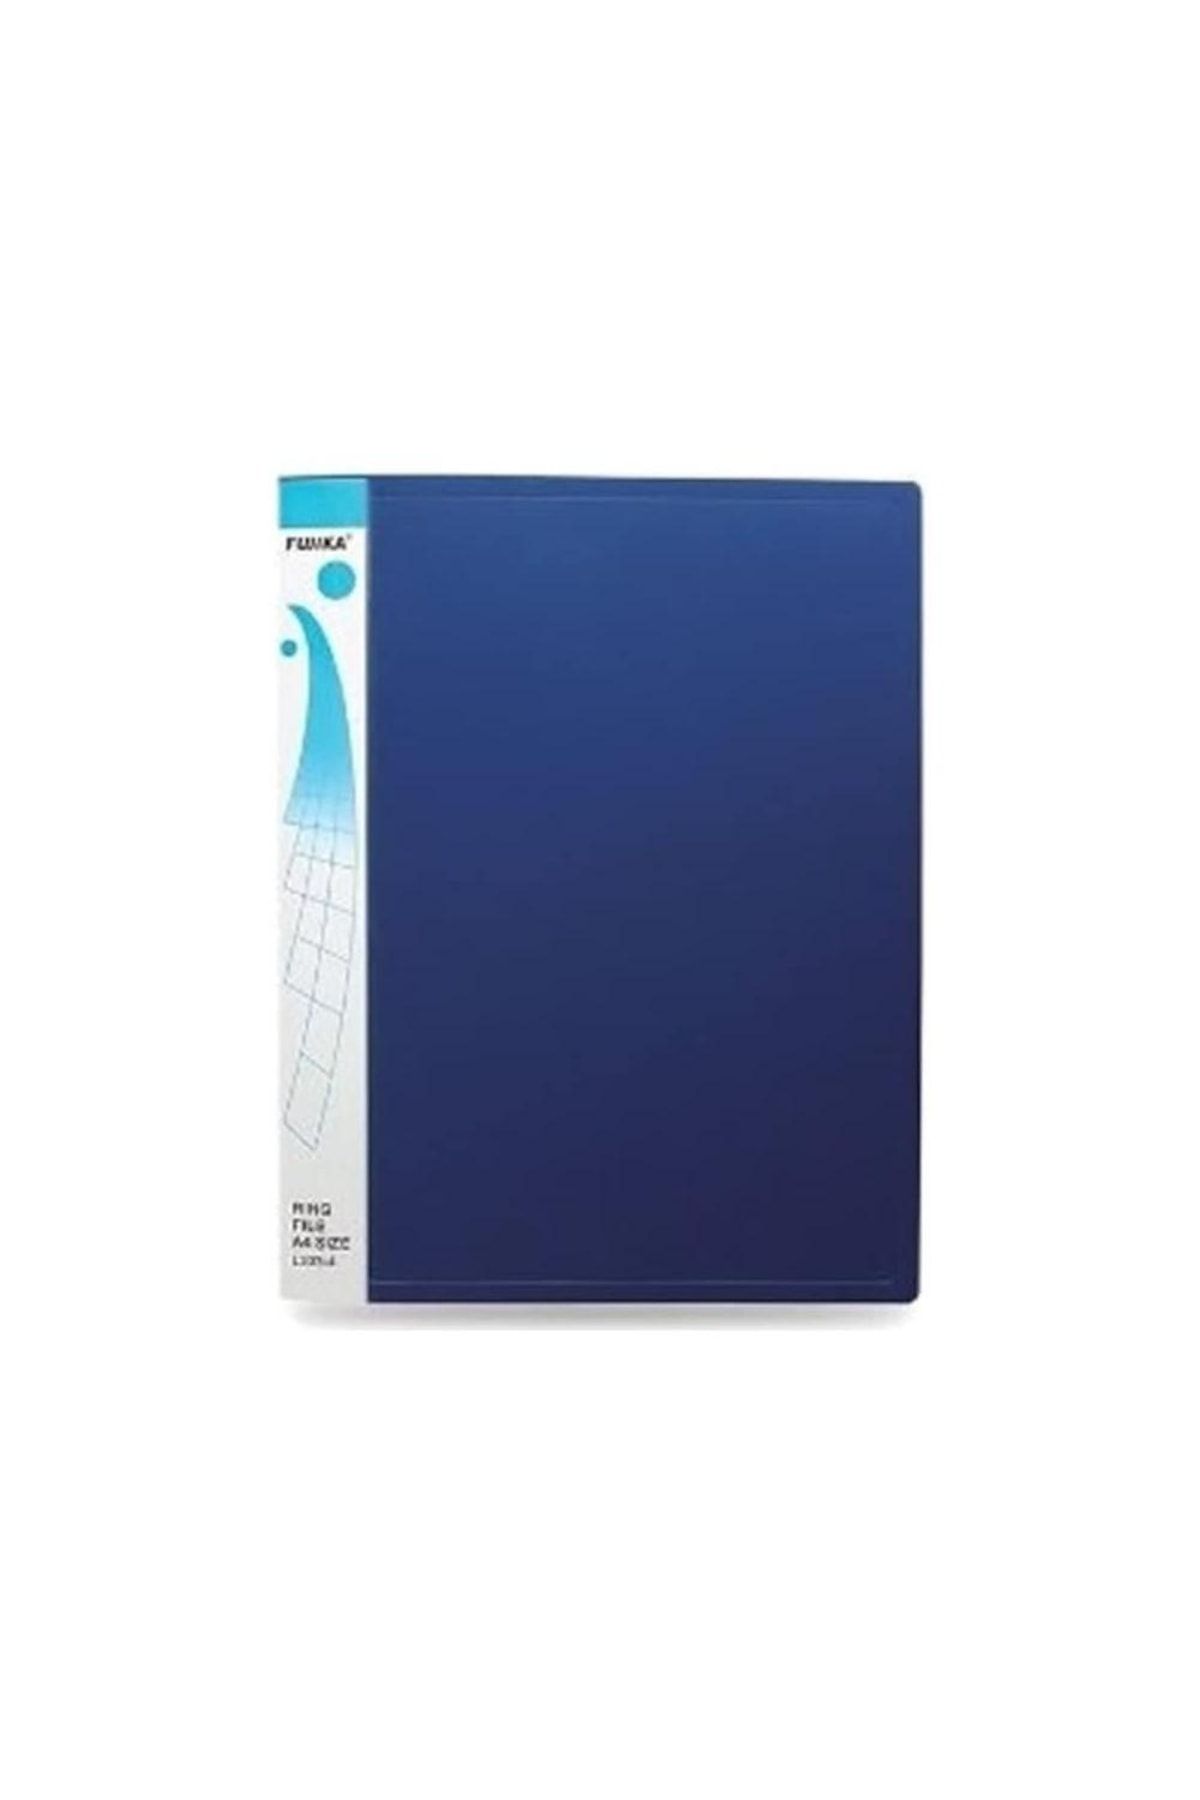 Fujika Katalog Sunum Dosyası 10 Kapasiteli A4 Mavi